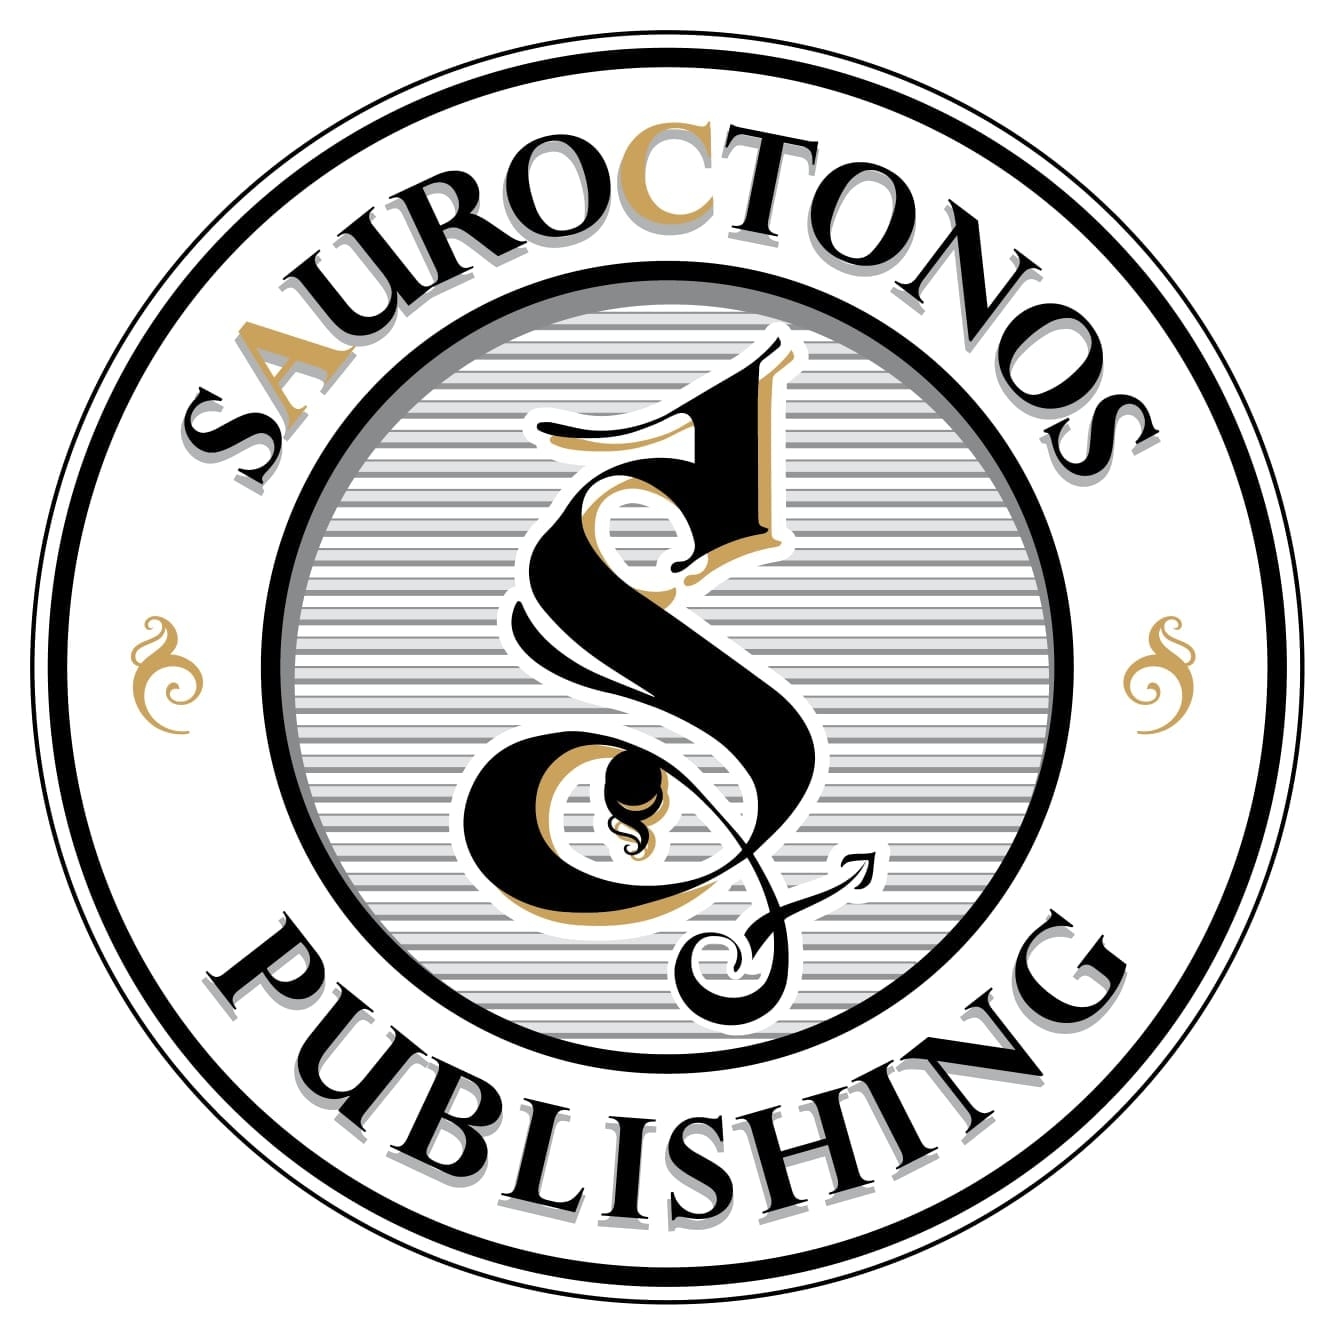 Sauroctonos Publishing